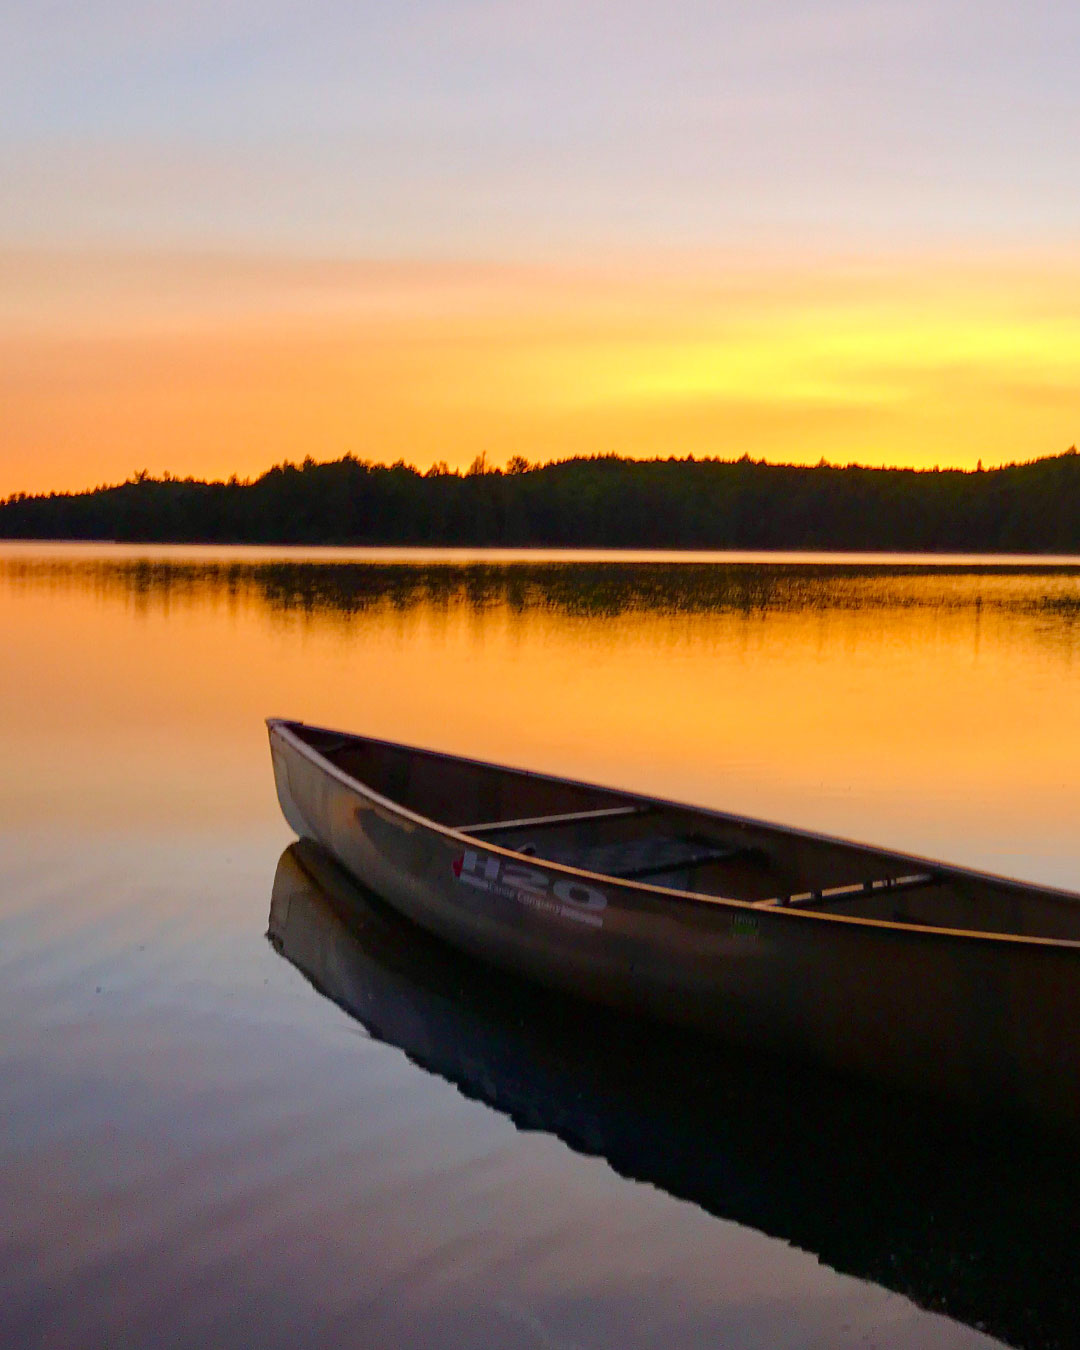 H2O Canoe Company Slideshow - Canoe on Water During Sunset